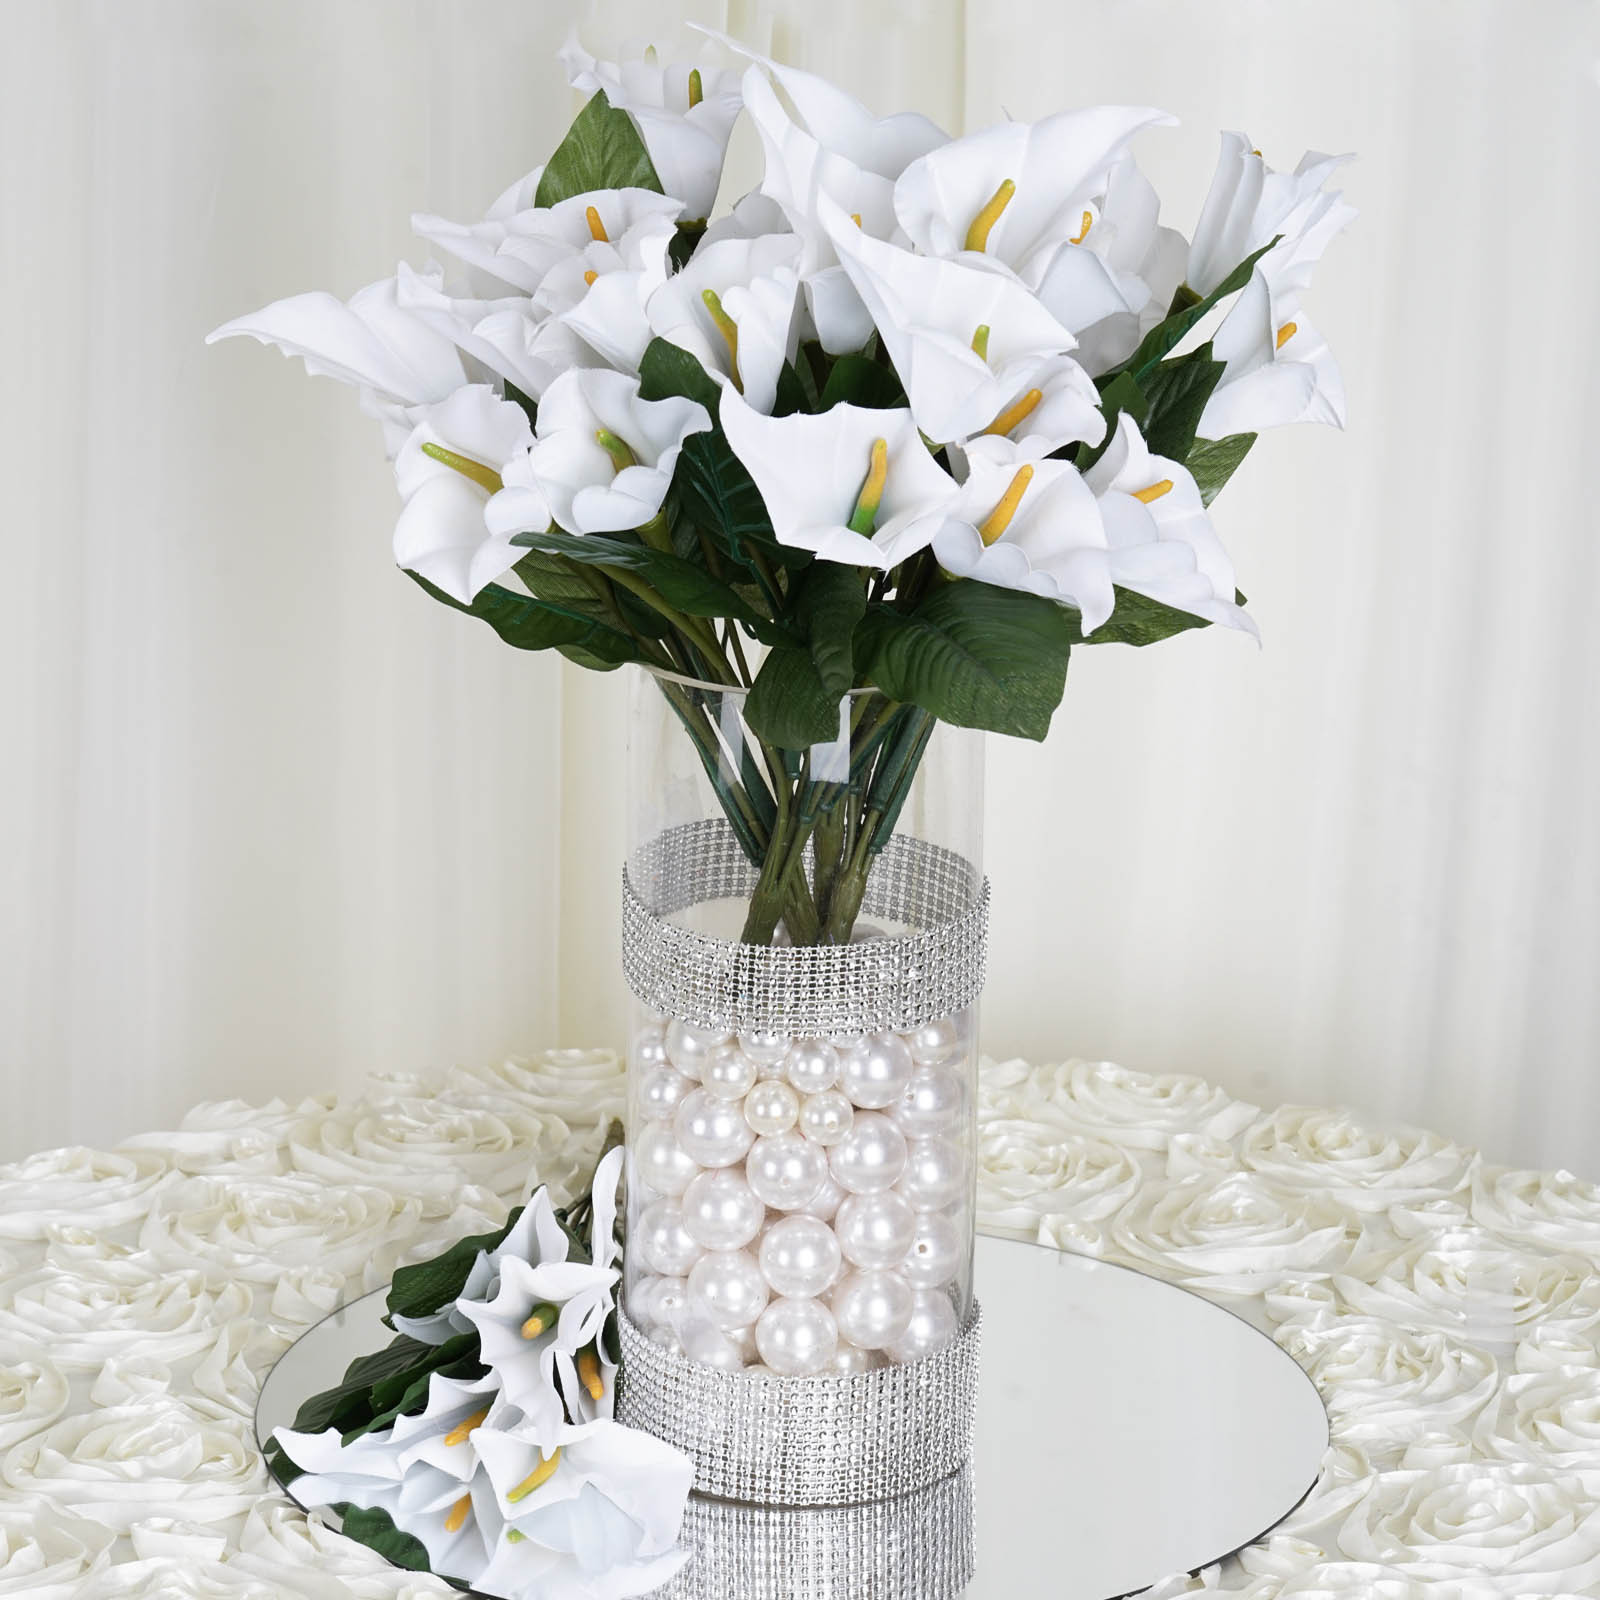 Silk Flower Wedding Centerpieces
 168 Silk Calla Lily Flowers for Wedding Bouquets